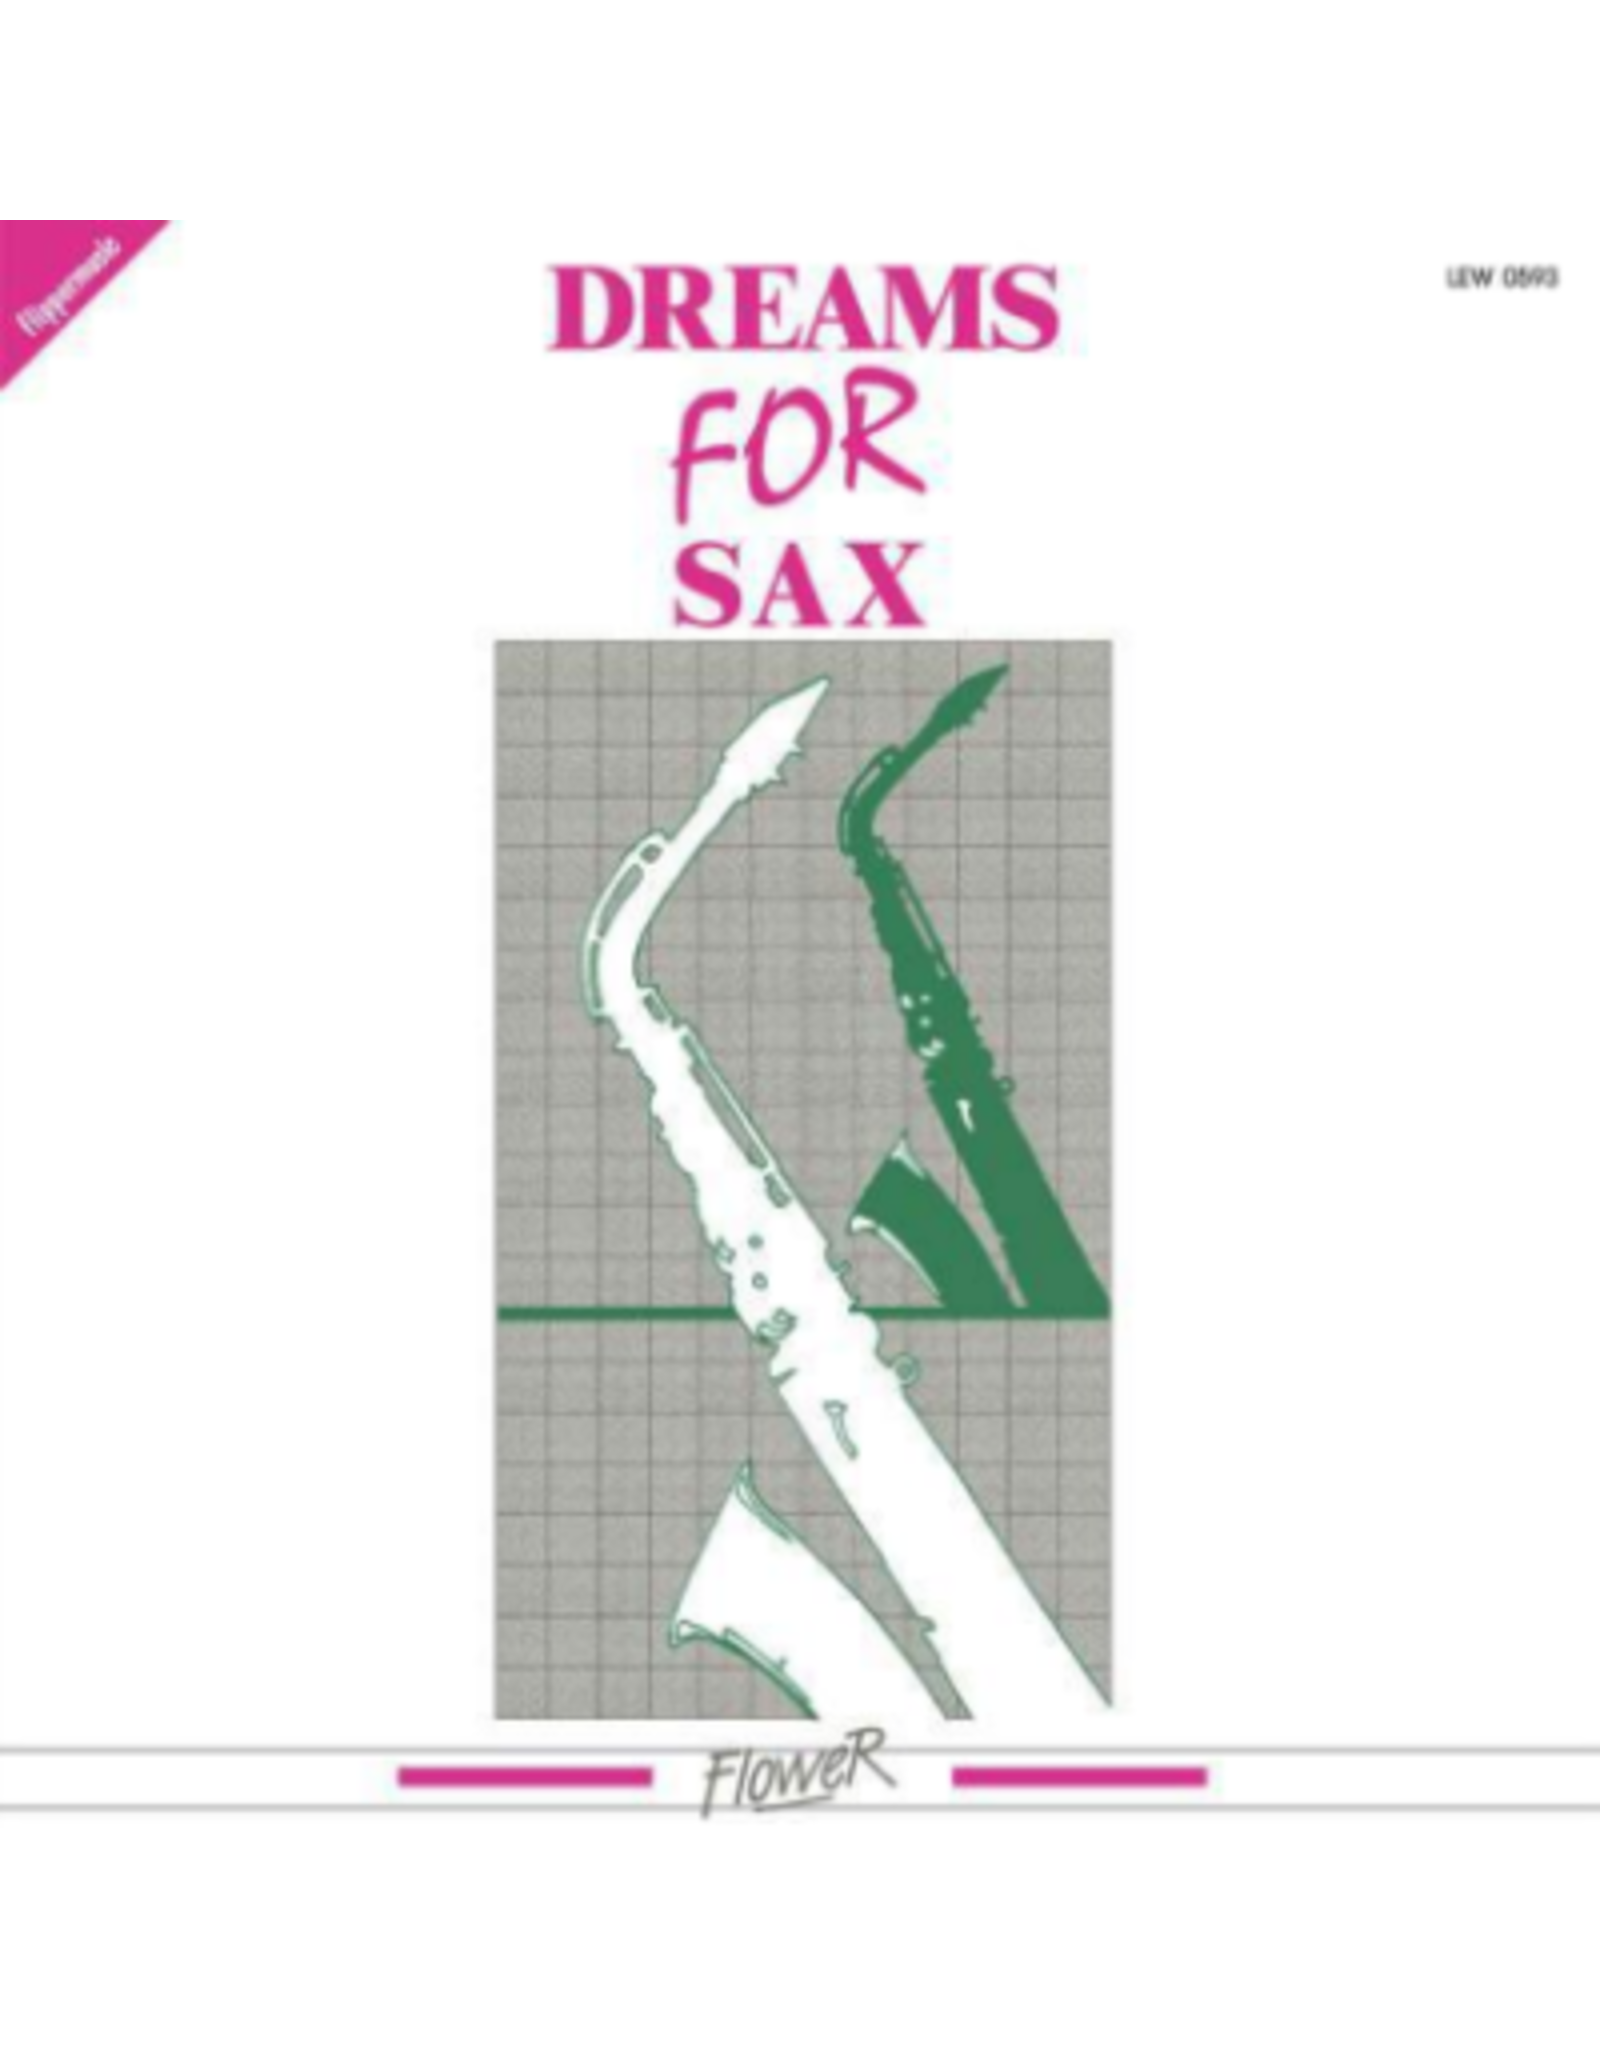 New Vinyl Gruppo Sound - Dreams For Sax LP